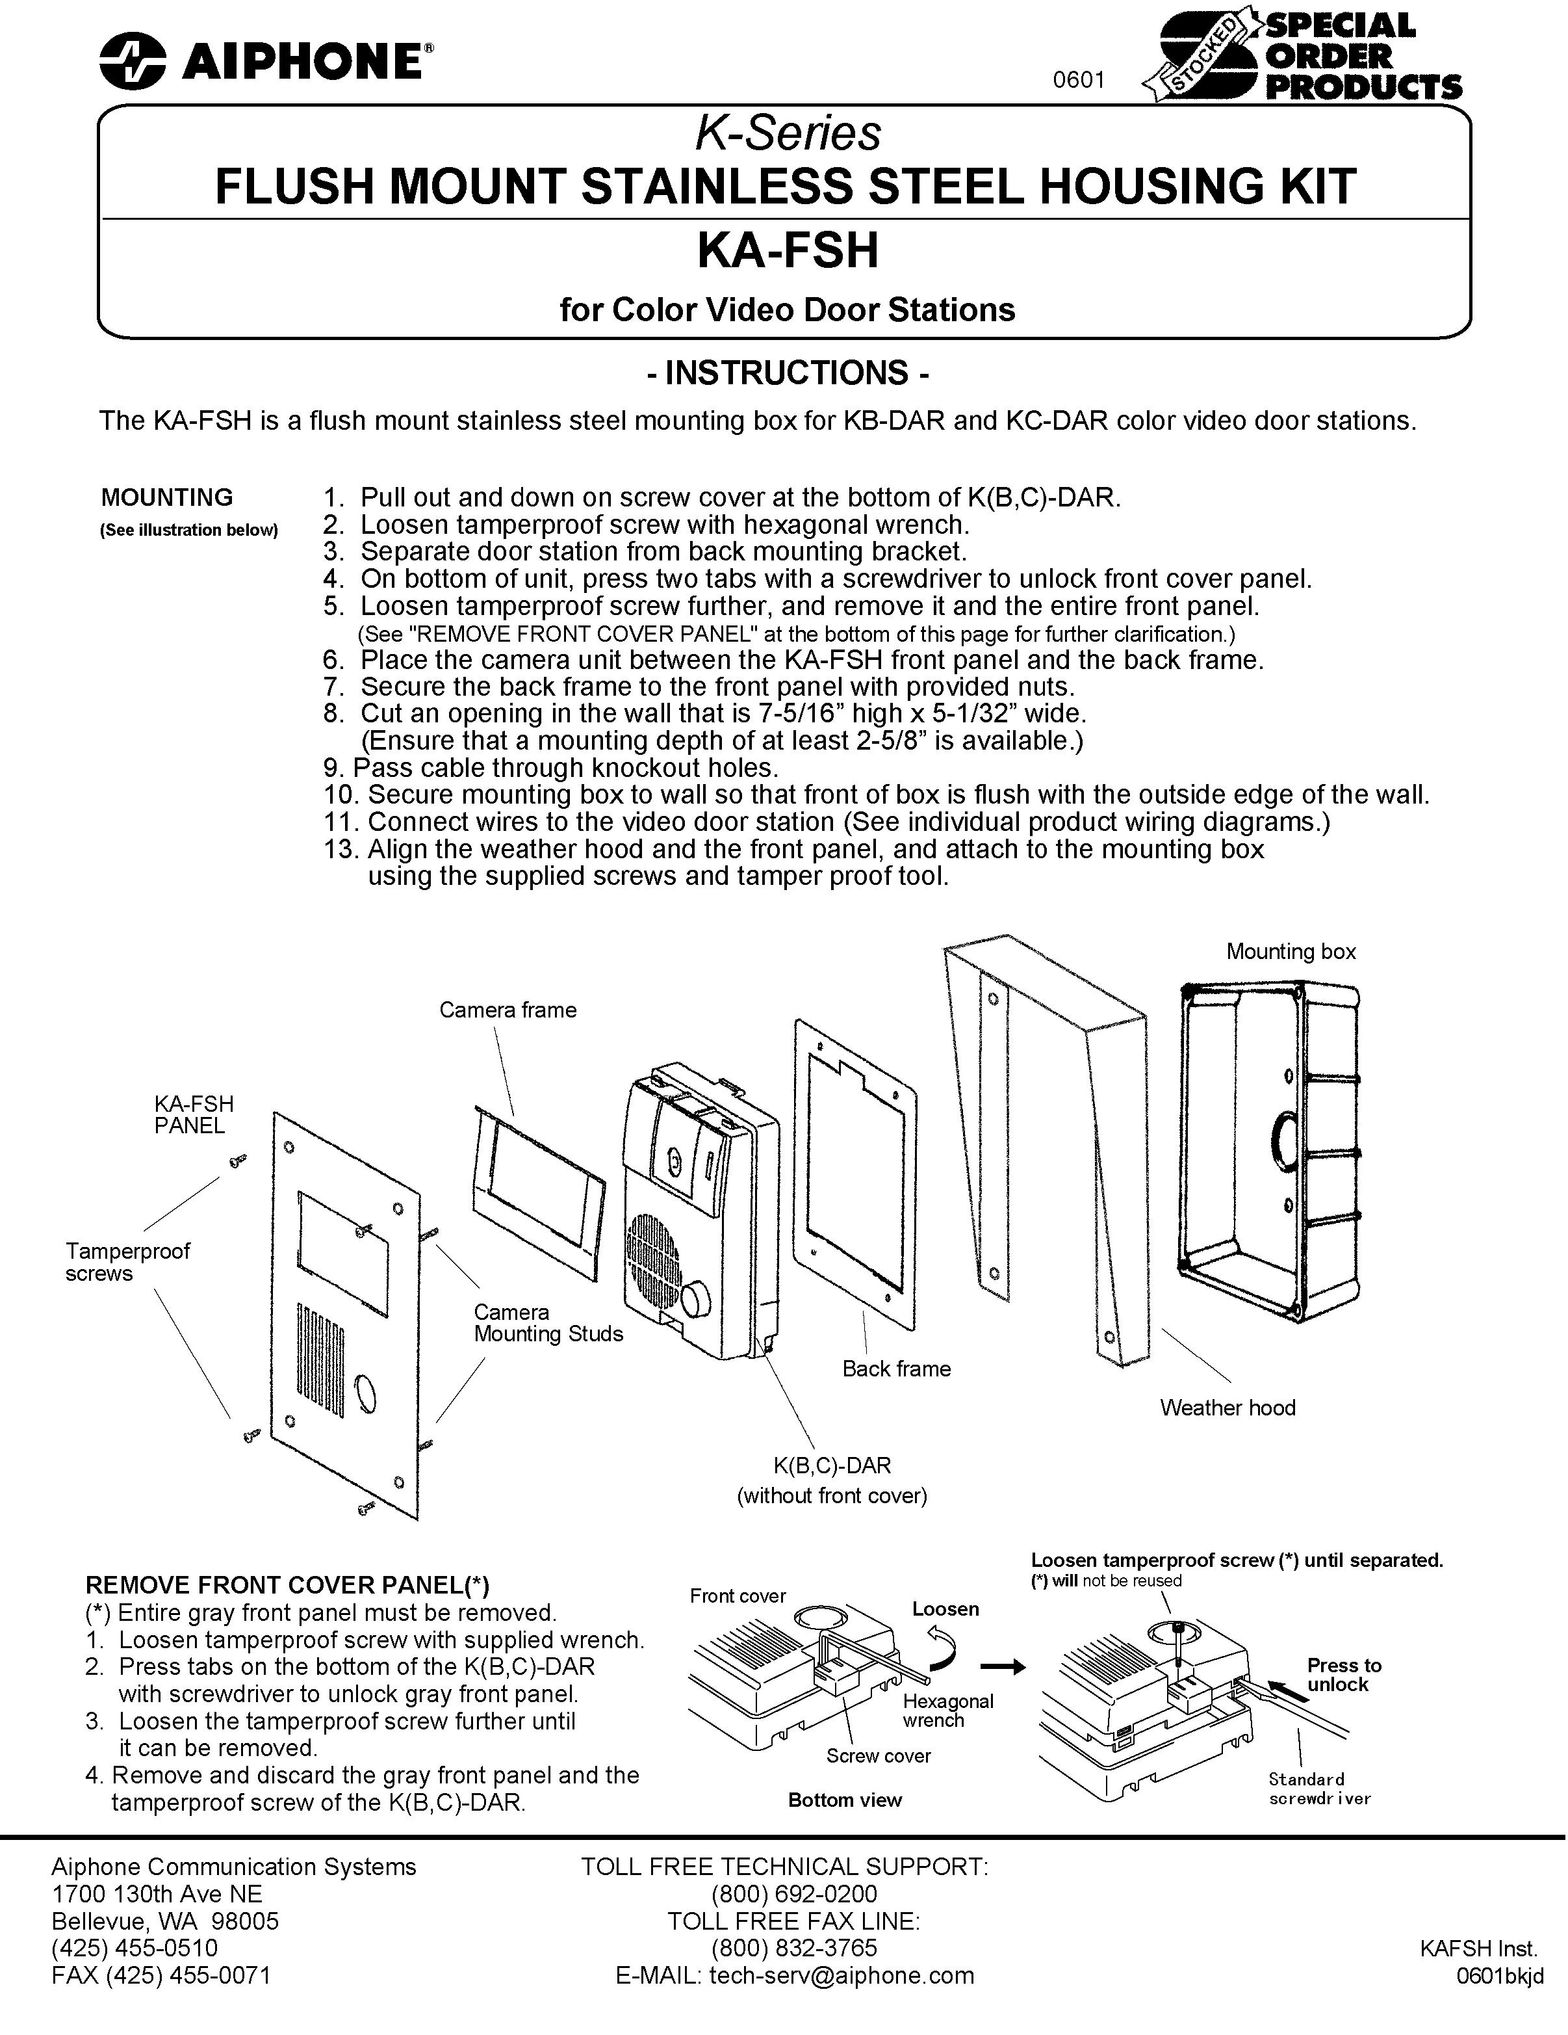 Aiphone KA-FSH Indoor Furnishings User Manual